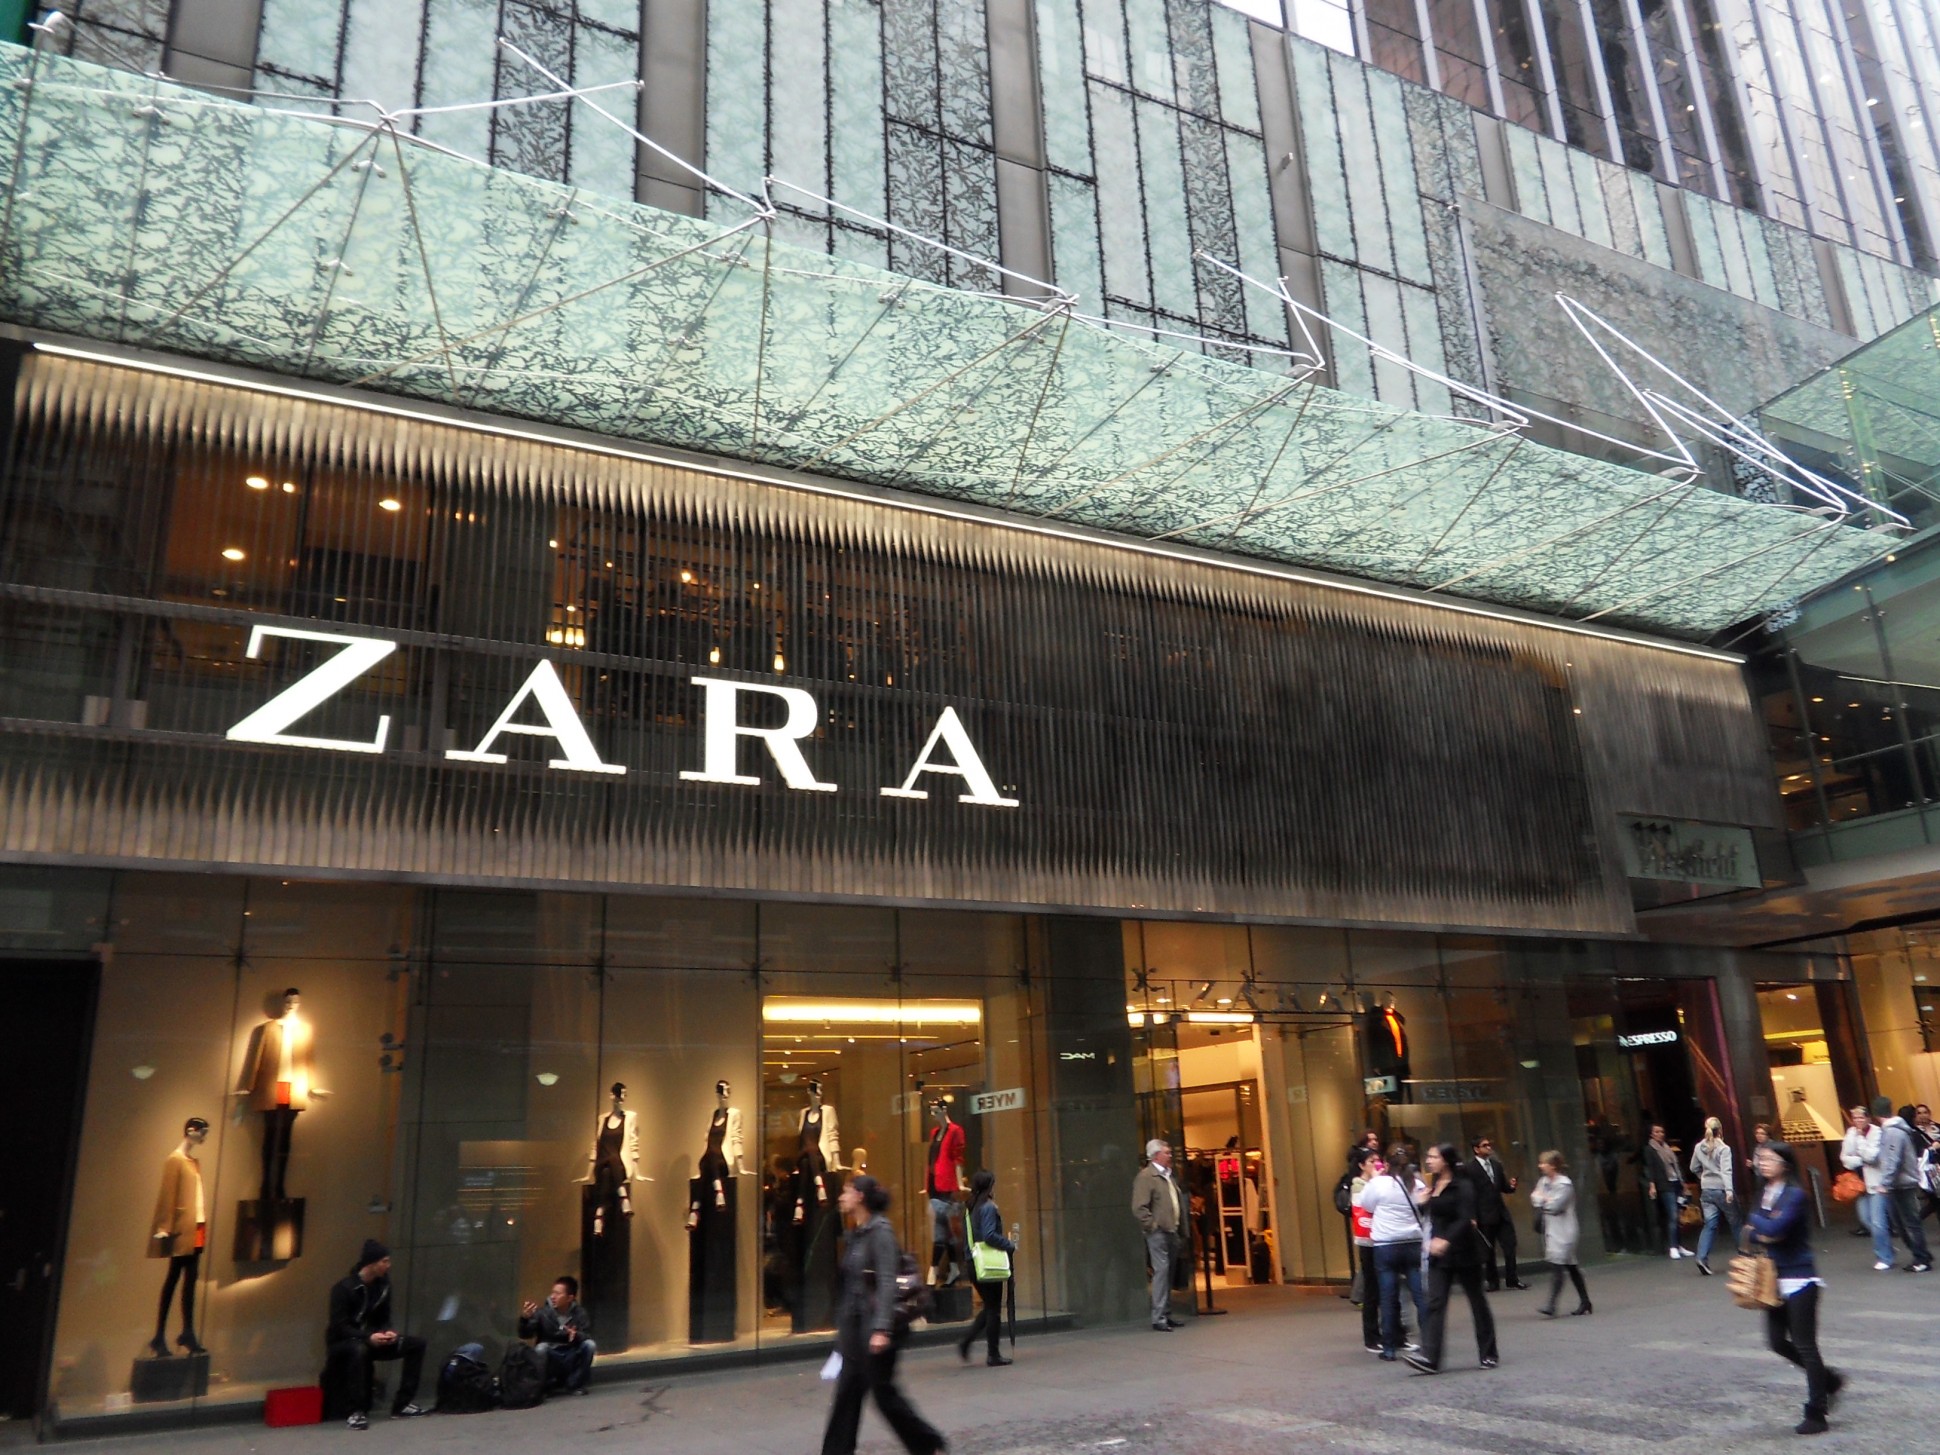 Zara operates more than 2,000 stores worldwide.